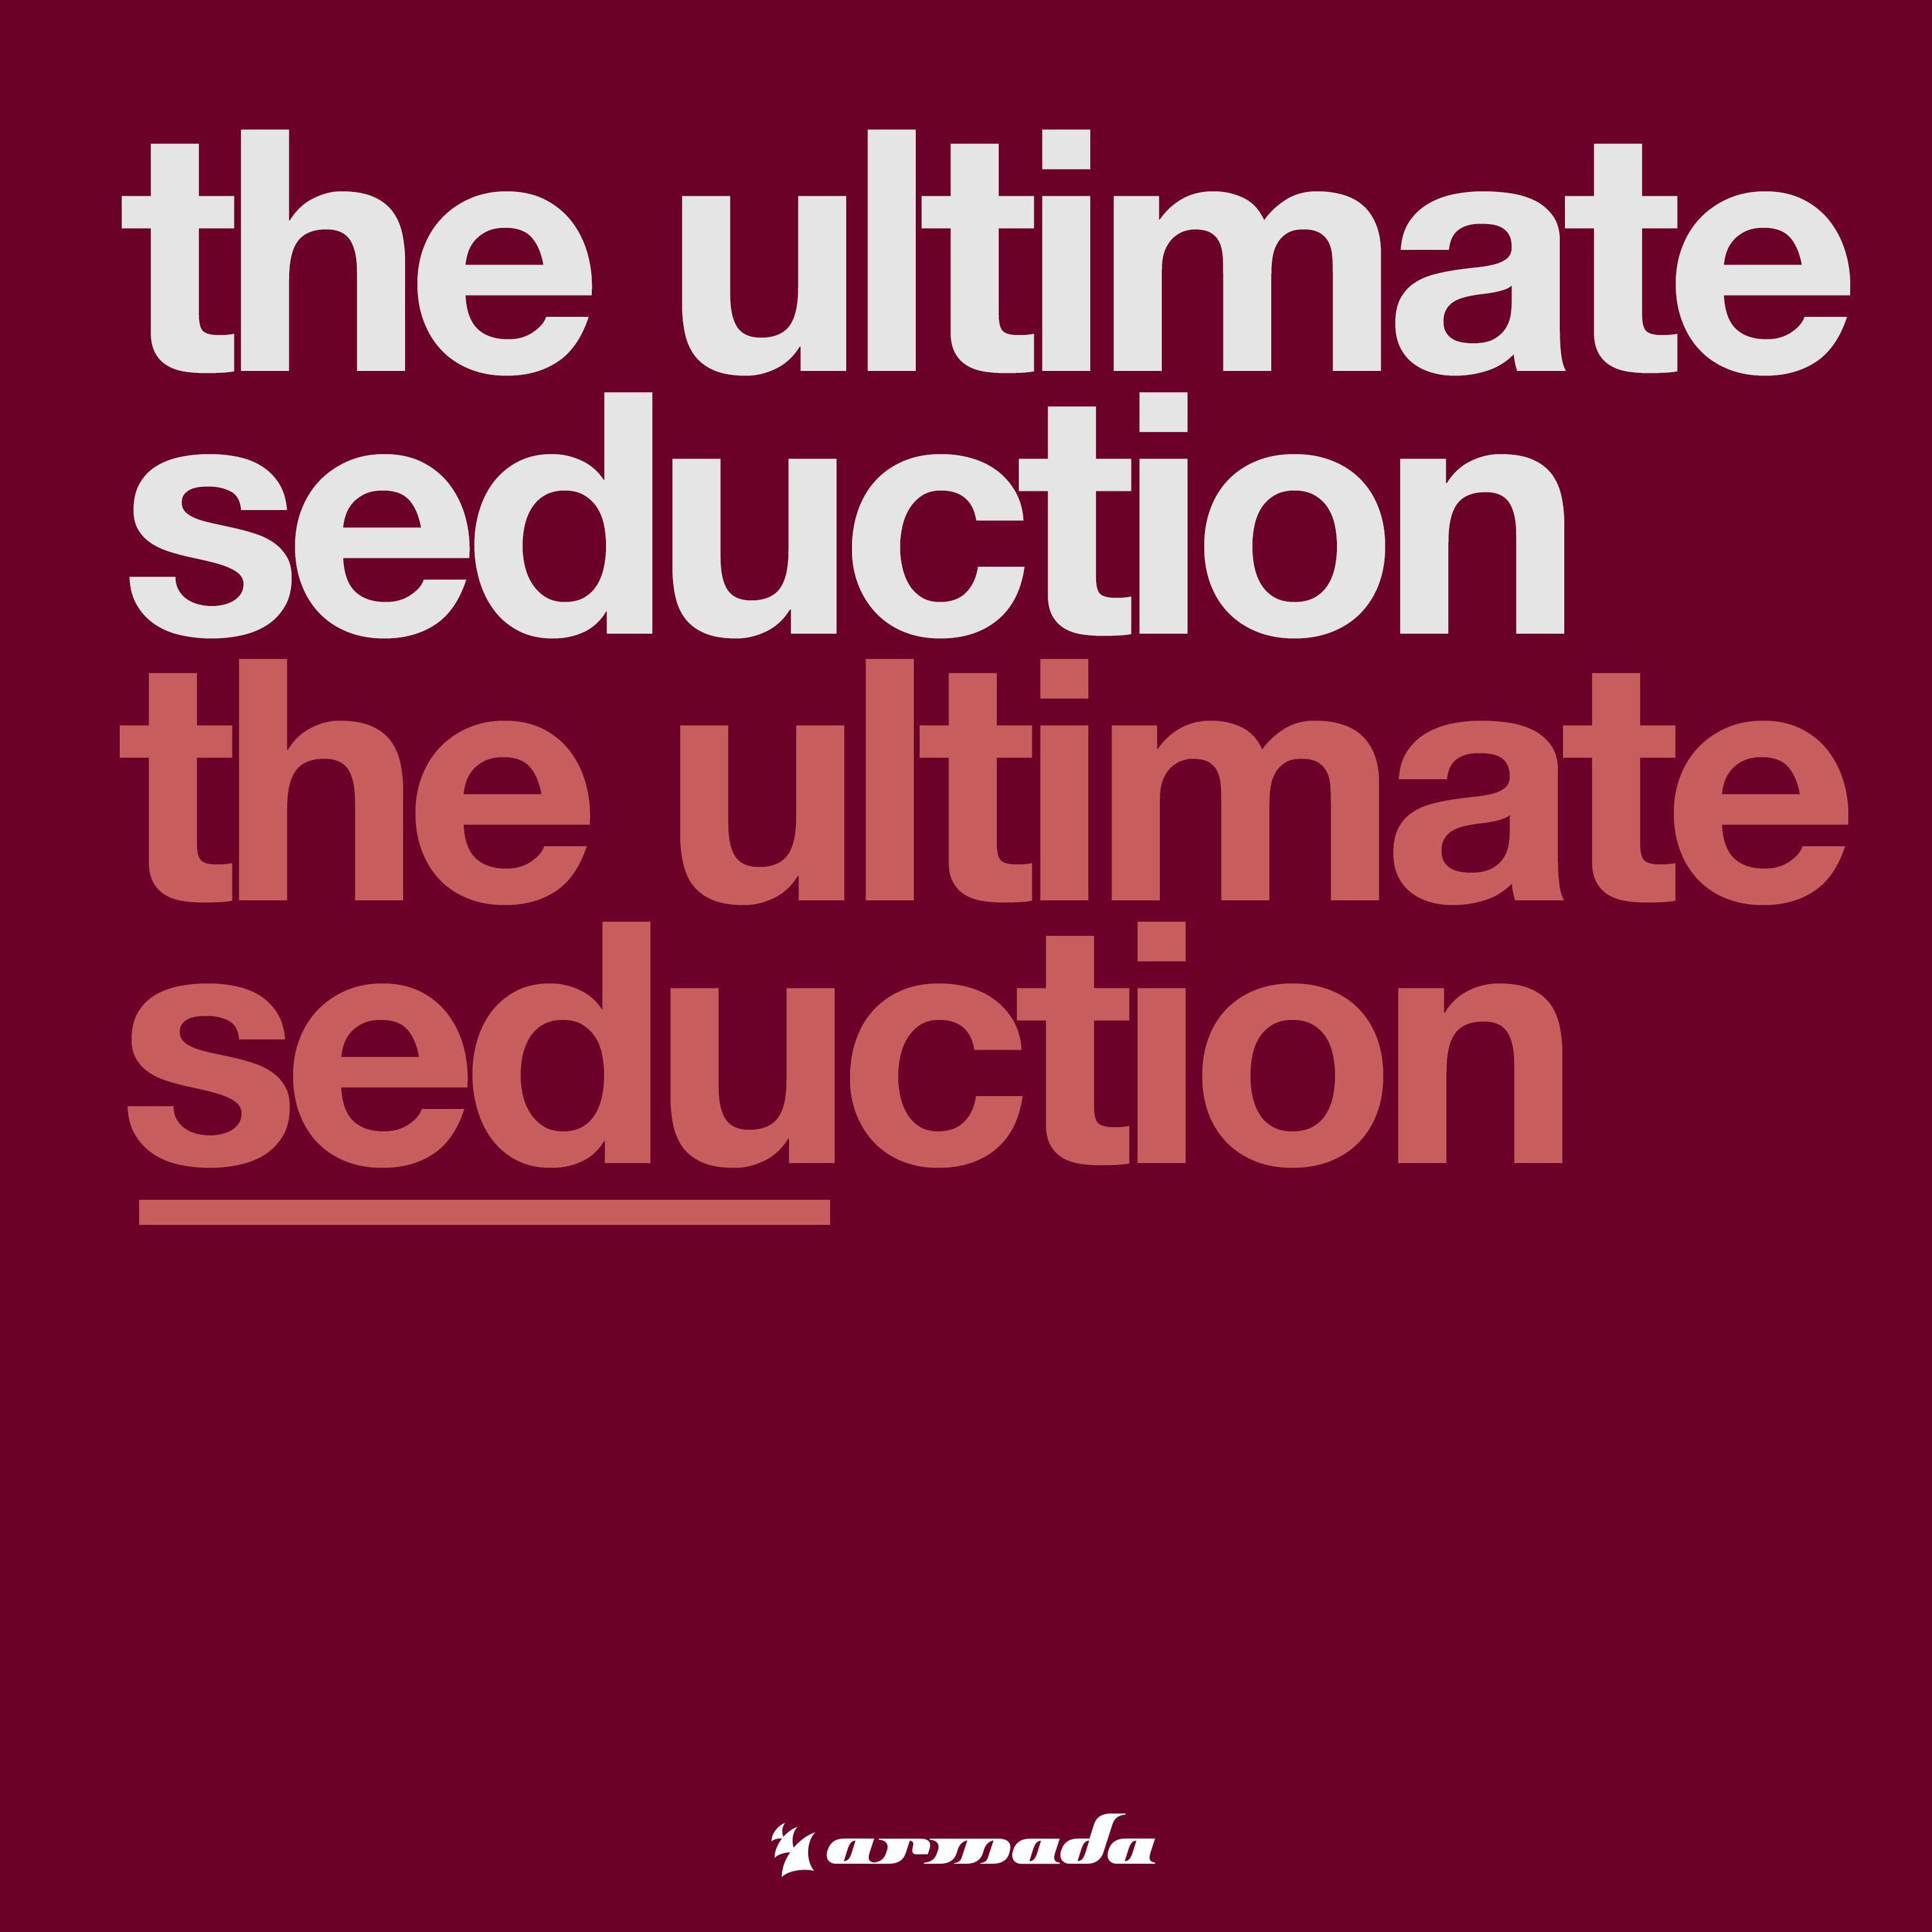 The Ultimate Seduction (DJ Patrick's Club Remix)